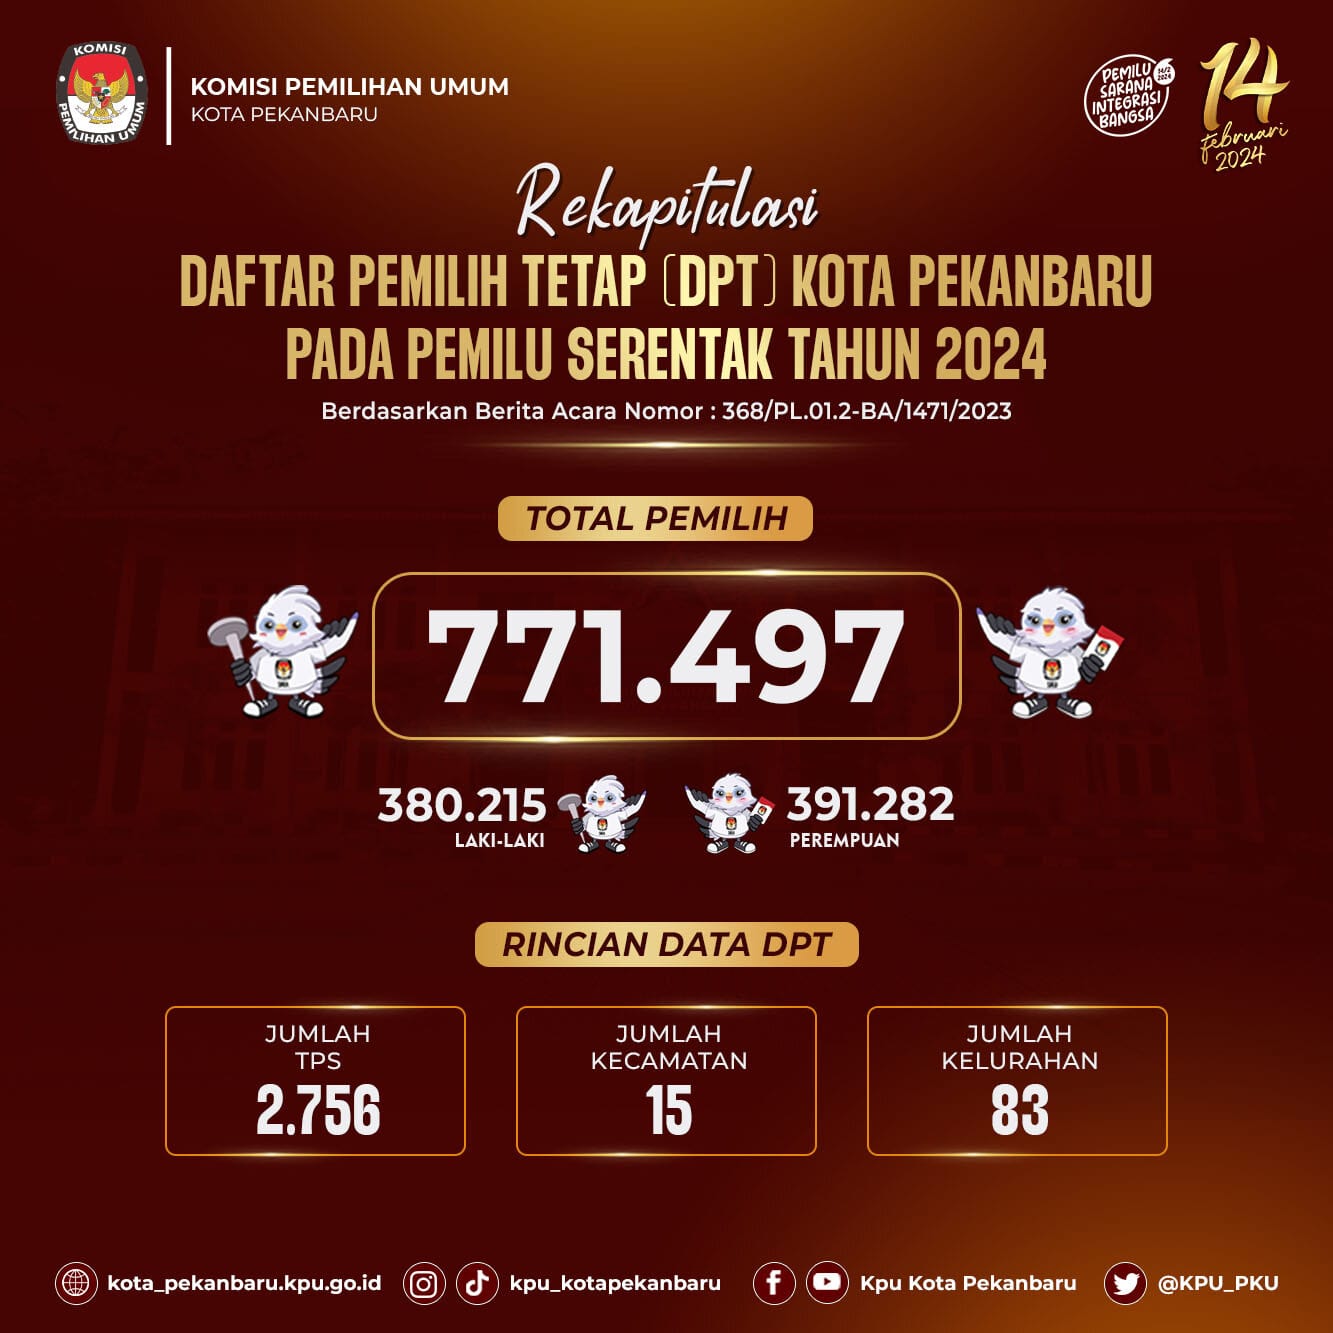 Rekapitulasi Daftar Pemillih Tetap (DPT) Kota Pekanbaru pada Pemilu 2024